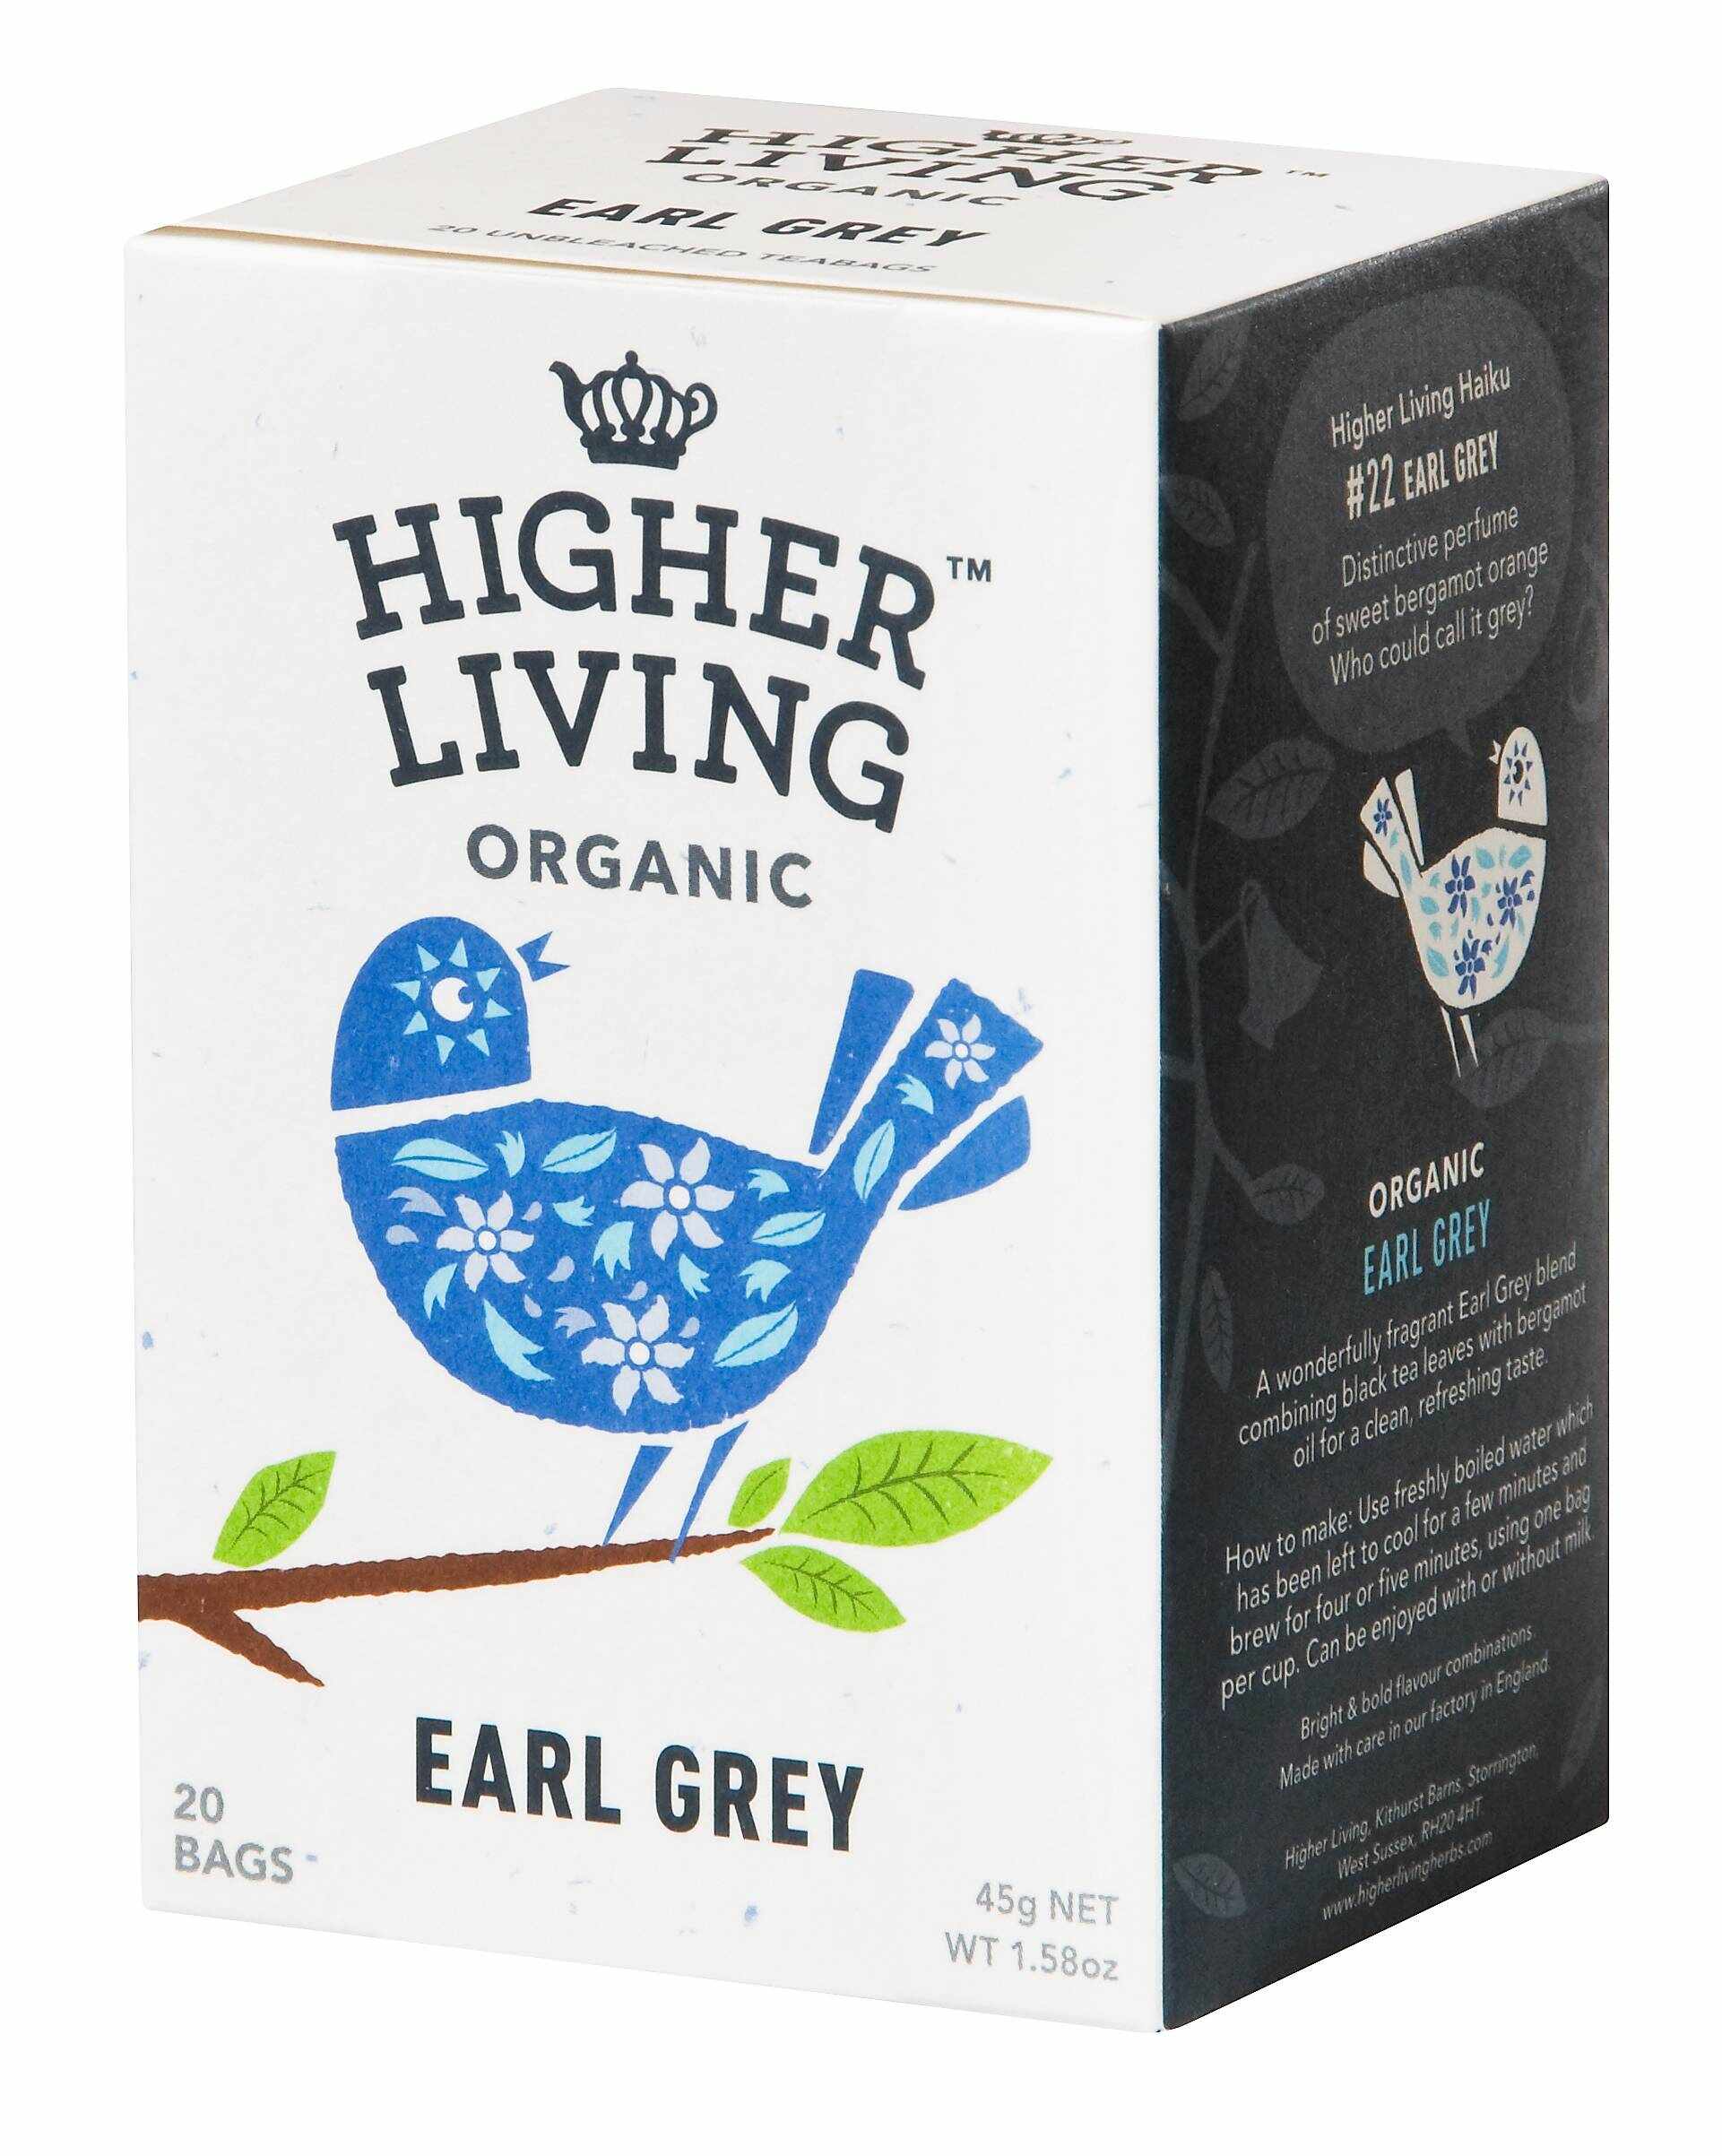 Ceai EARL GREY eco-bio, 20 plicuri, Higher Living